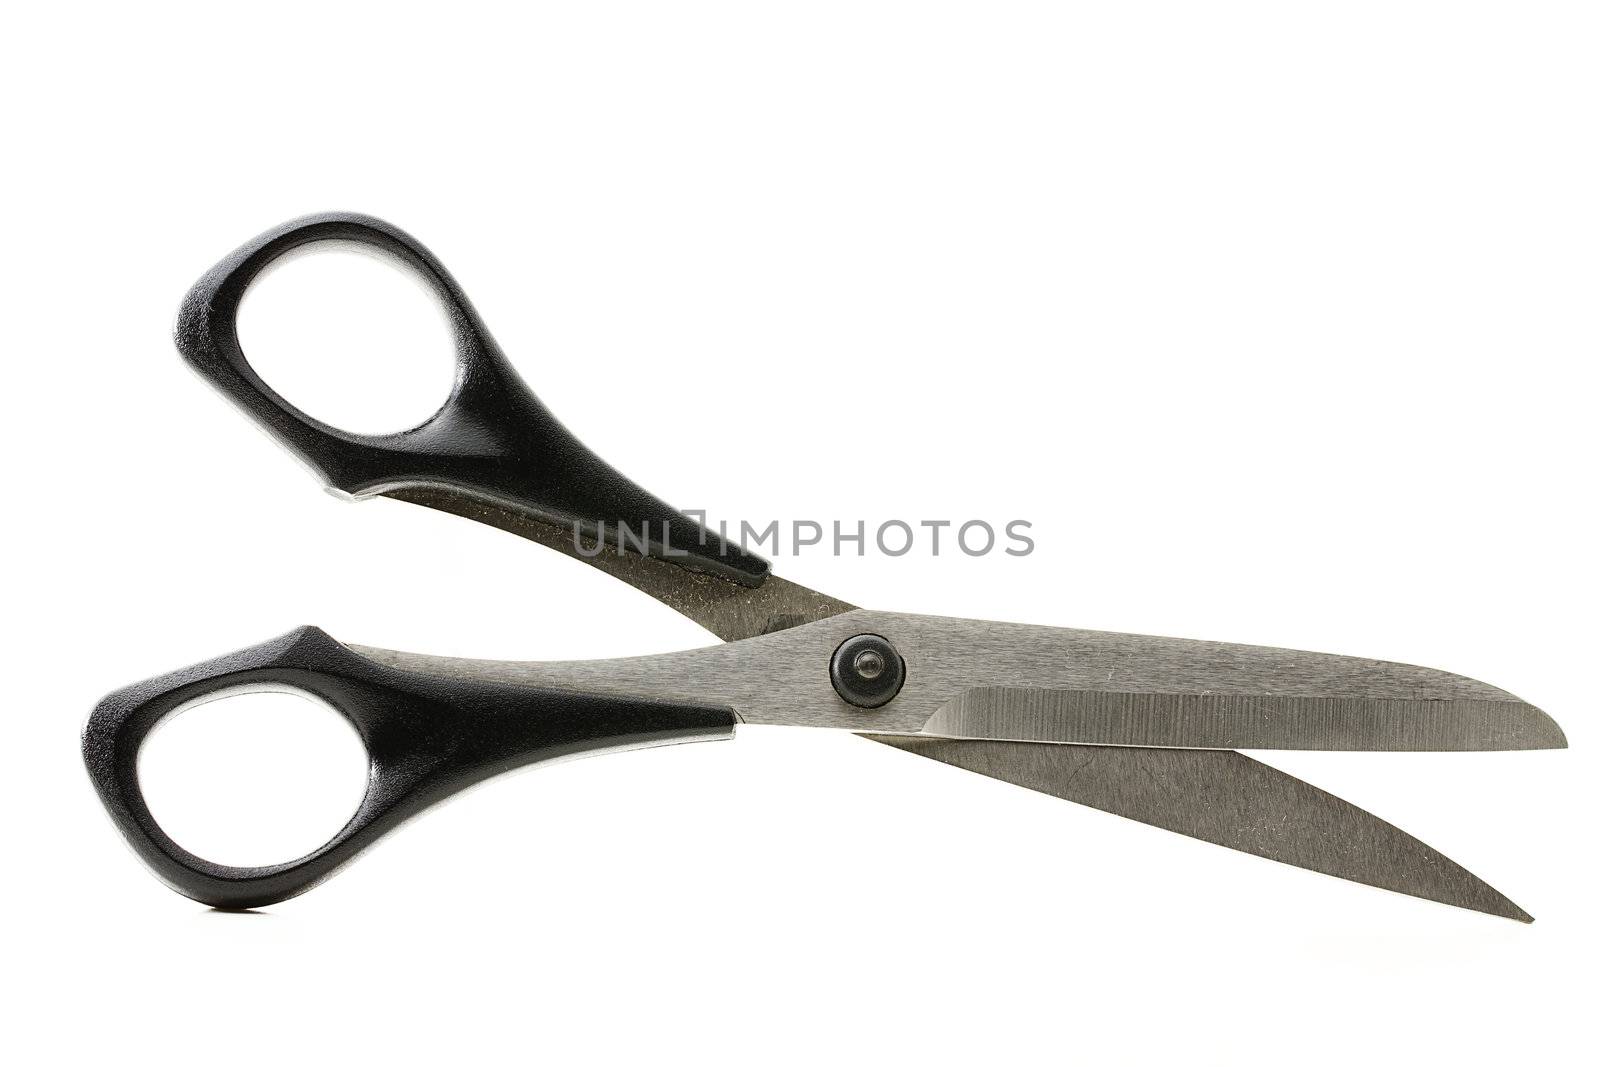 one scissor with black handgrip on white background